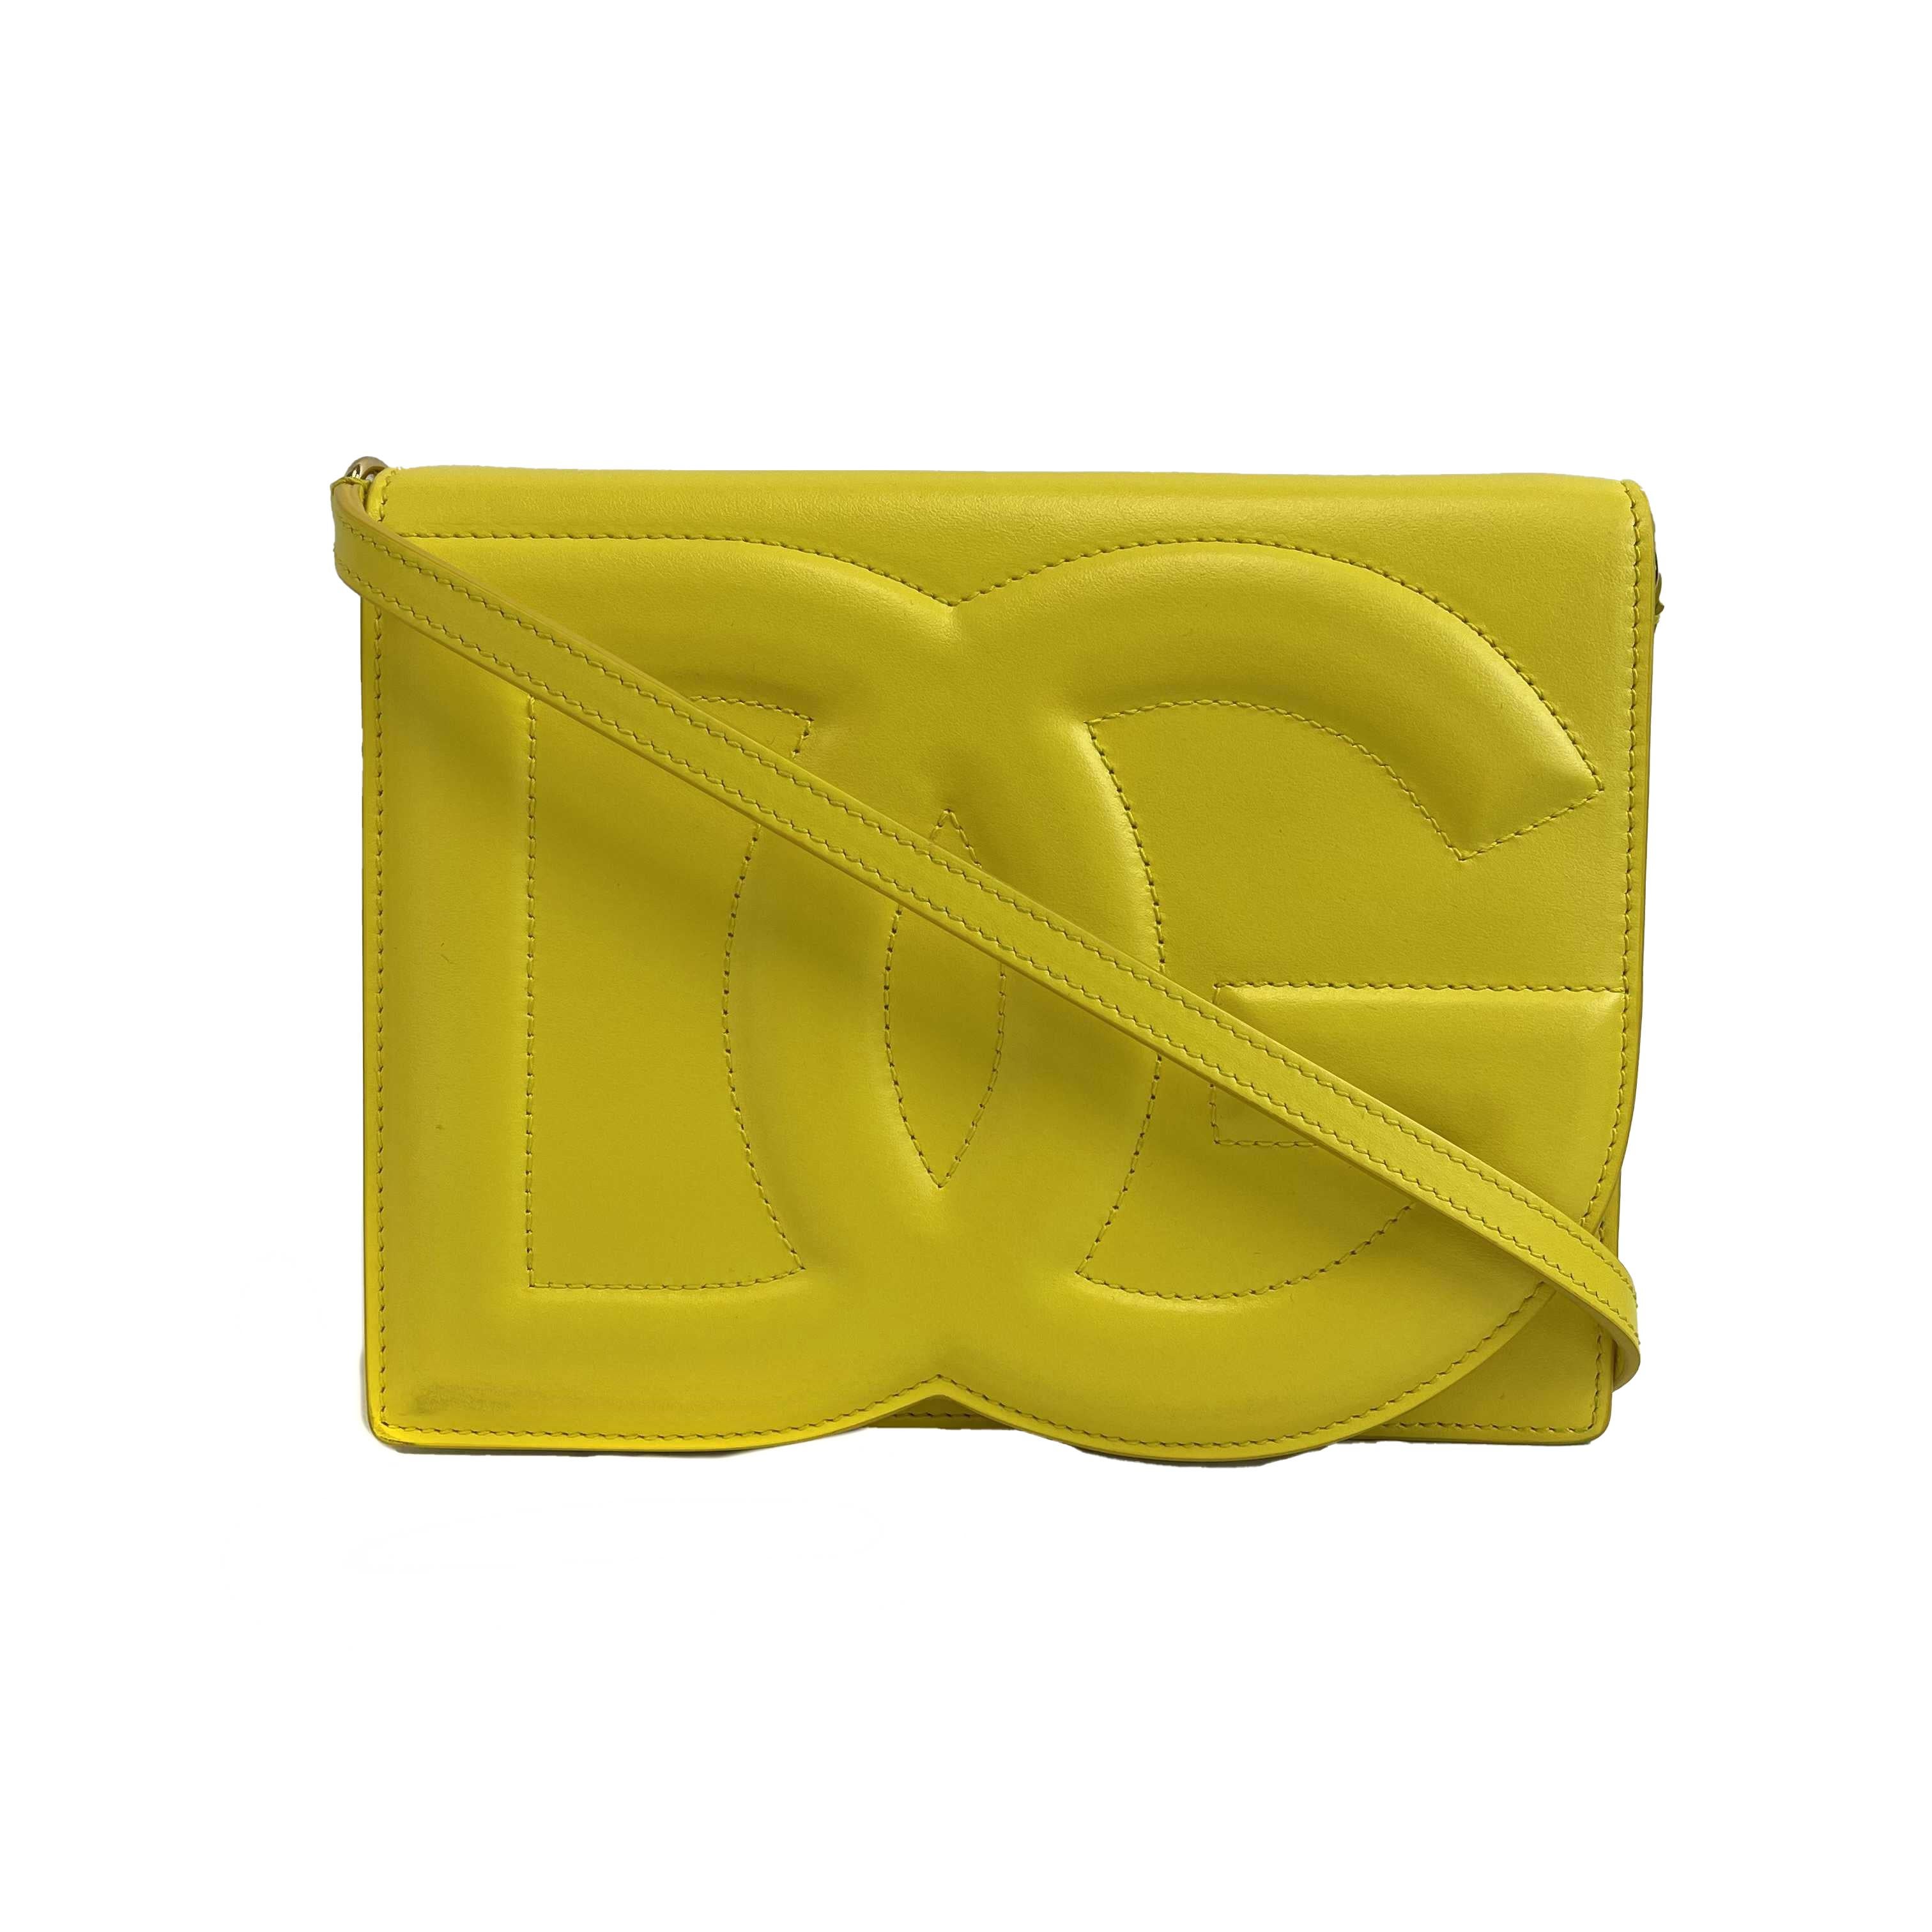 	Dolce & Gabbana - NEW DG Logo Yellow Crossbody / Shoulder Bag 5